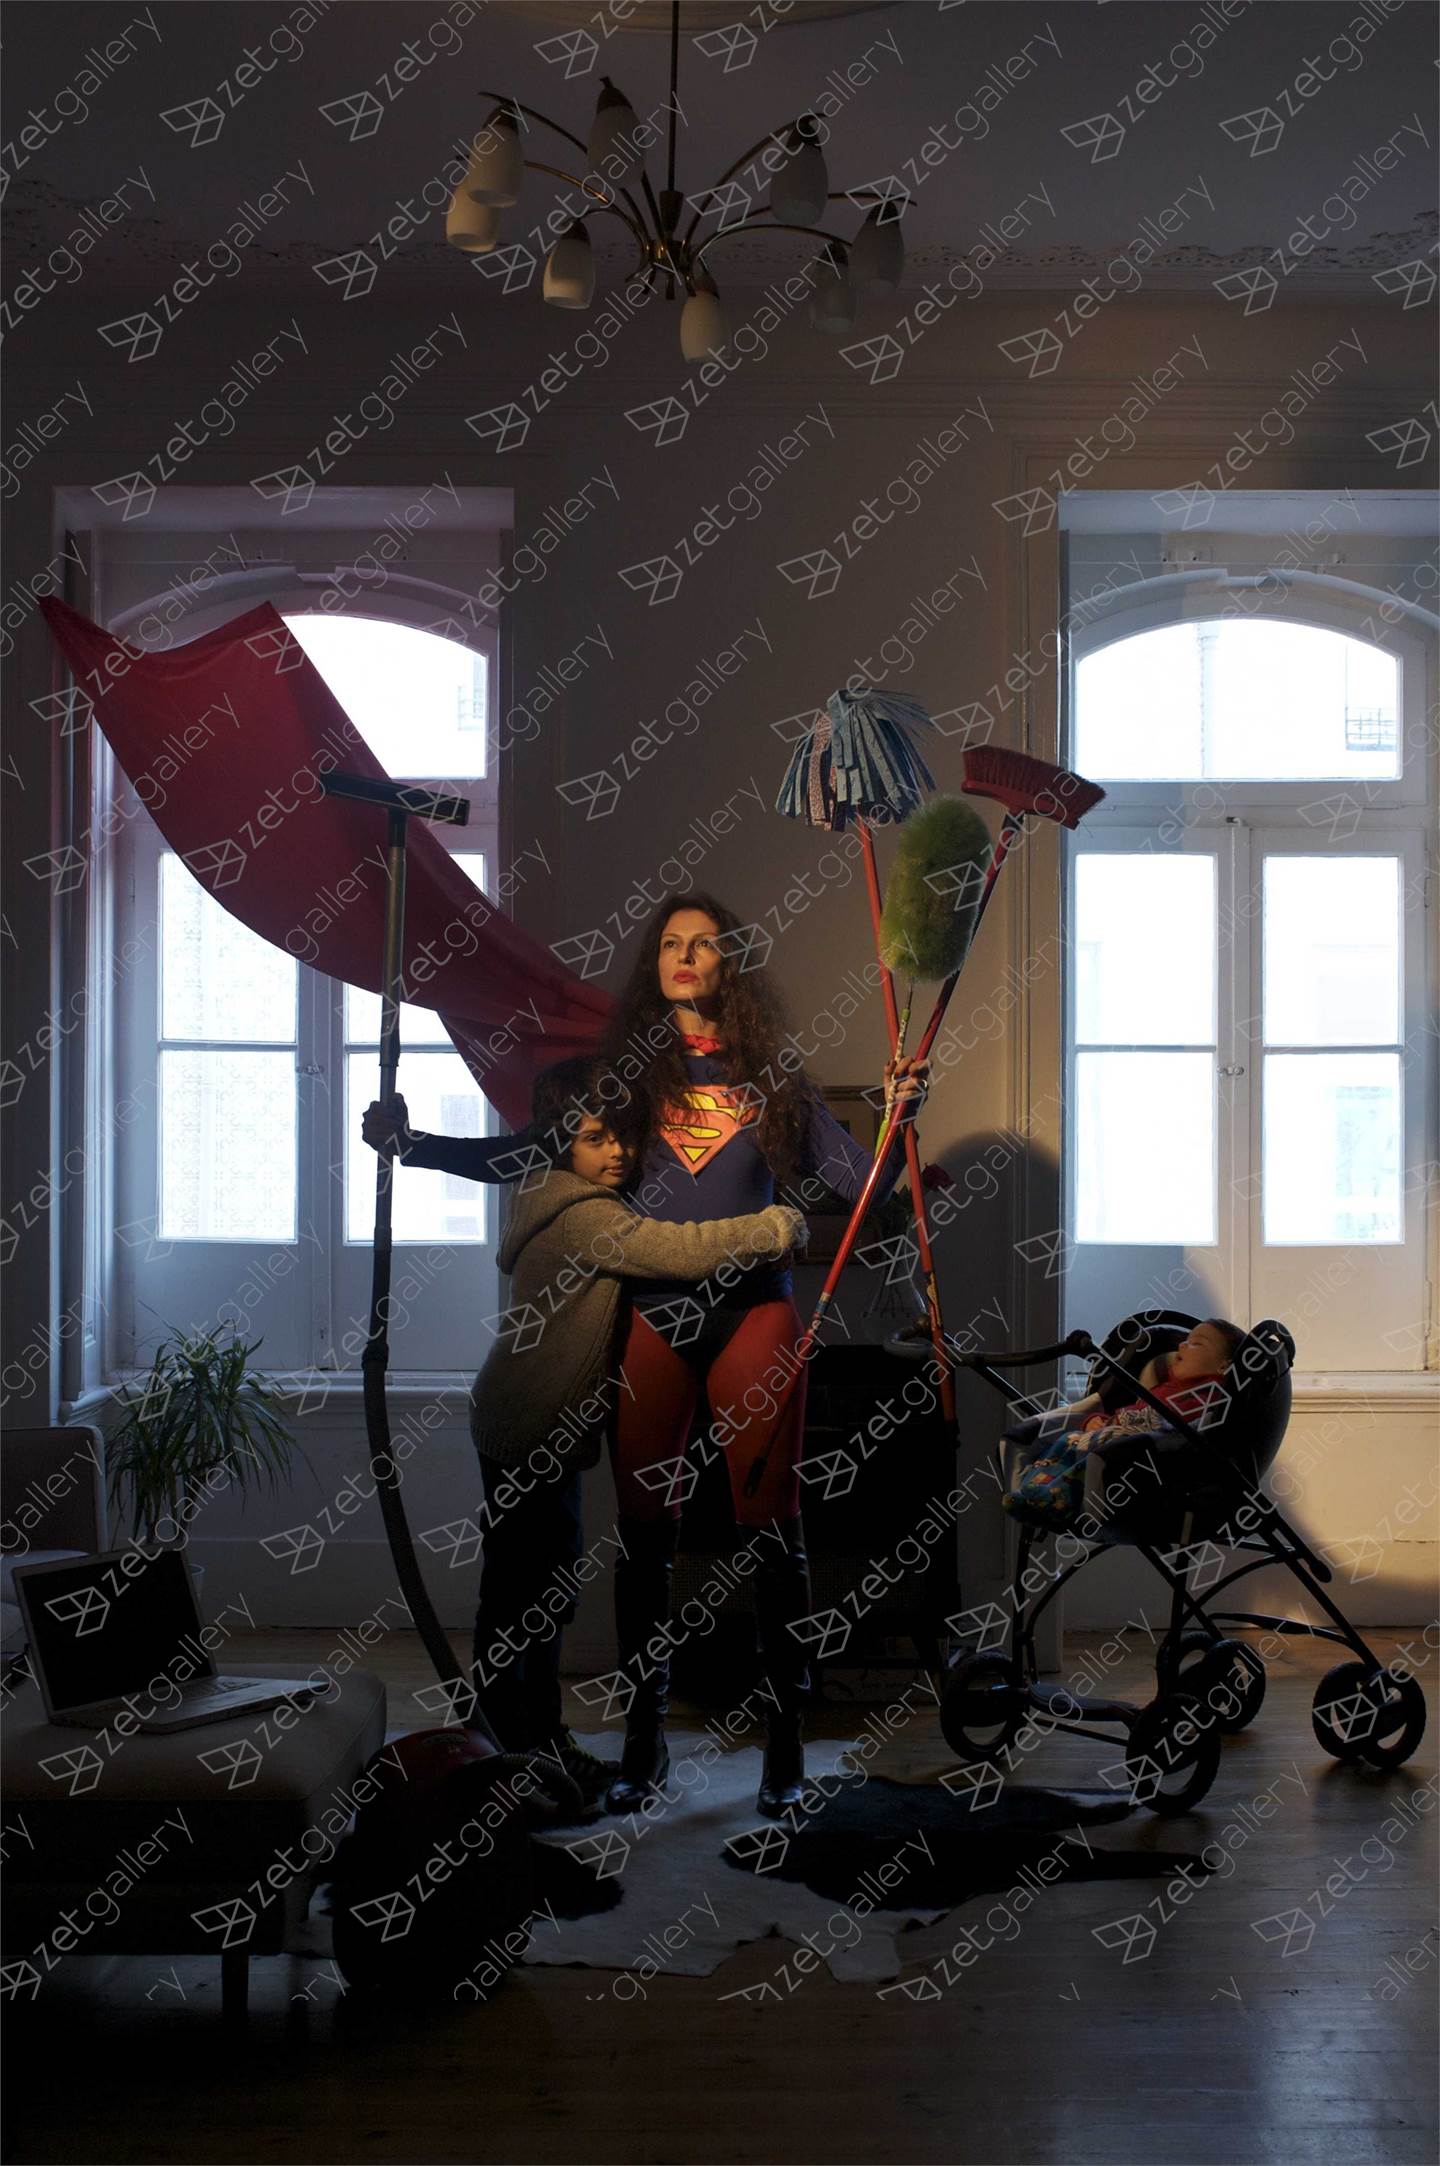 Supermom, original Human Figure Digital Photography by Claudia Clemente